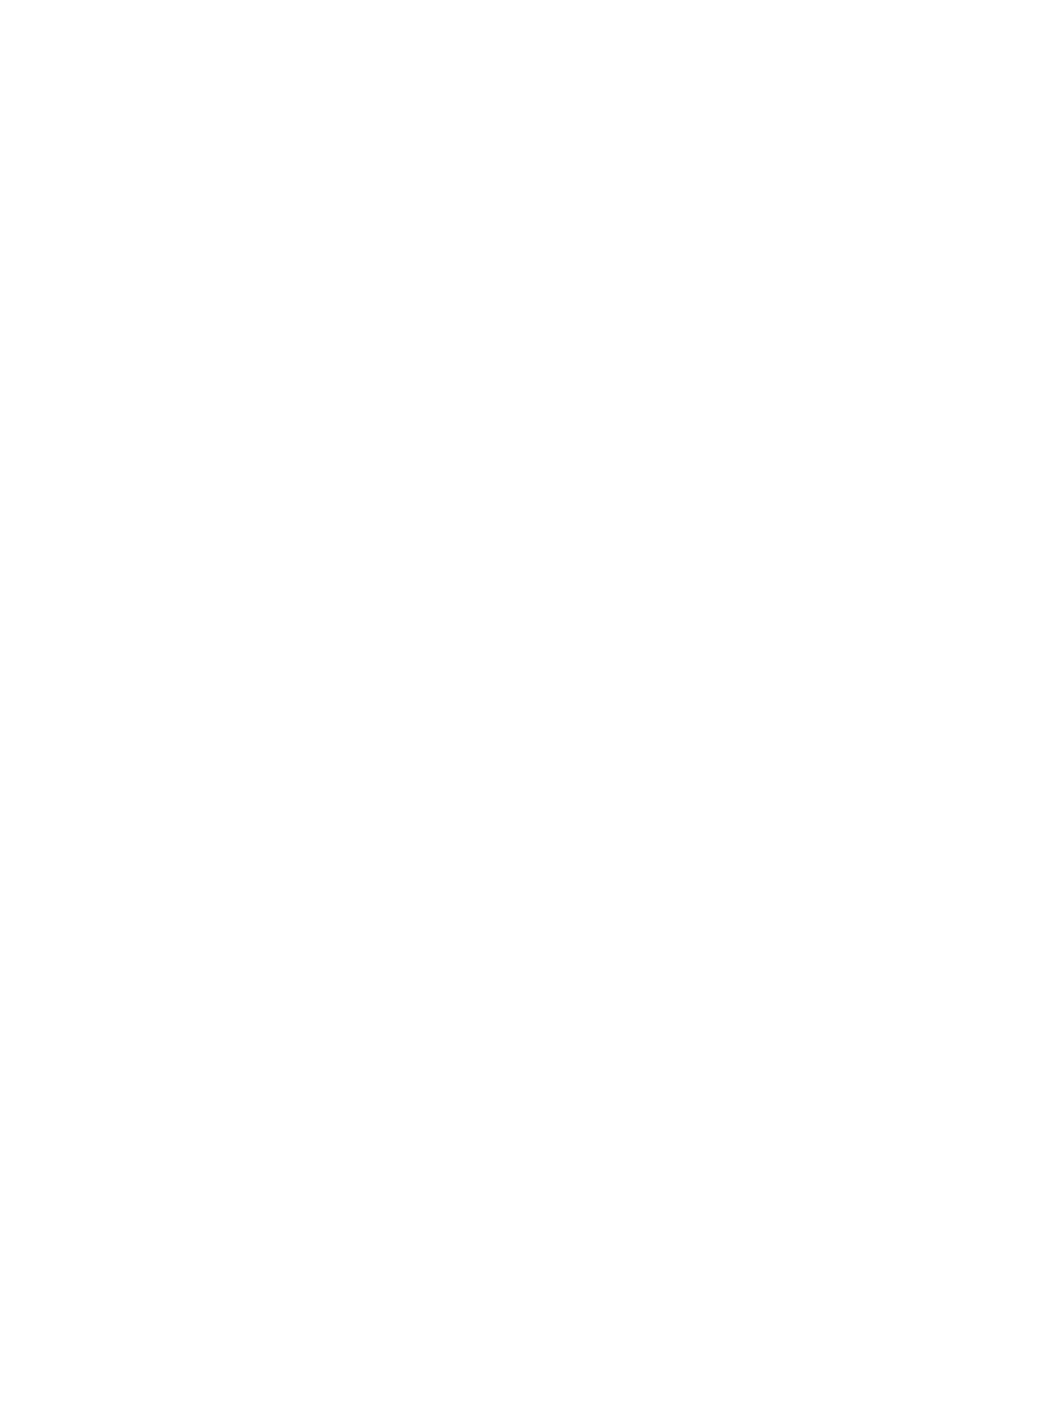 The Hospitality B2B Portfolio, 15-16 October 2024, London ExCeL